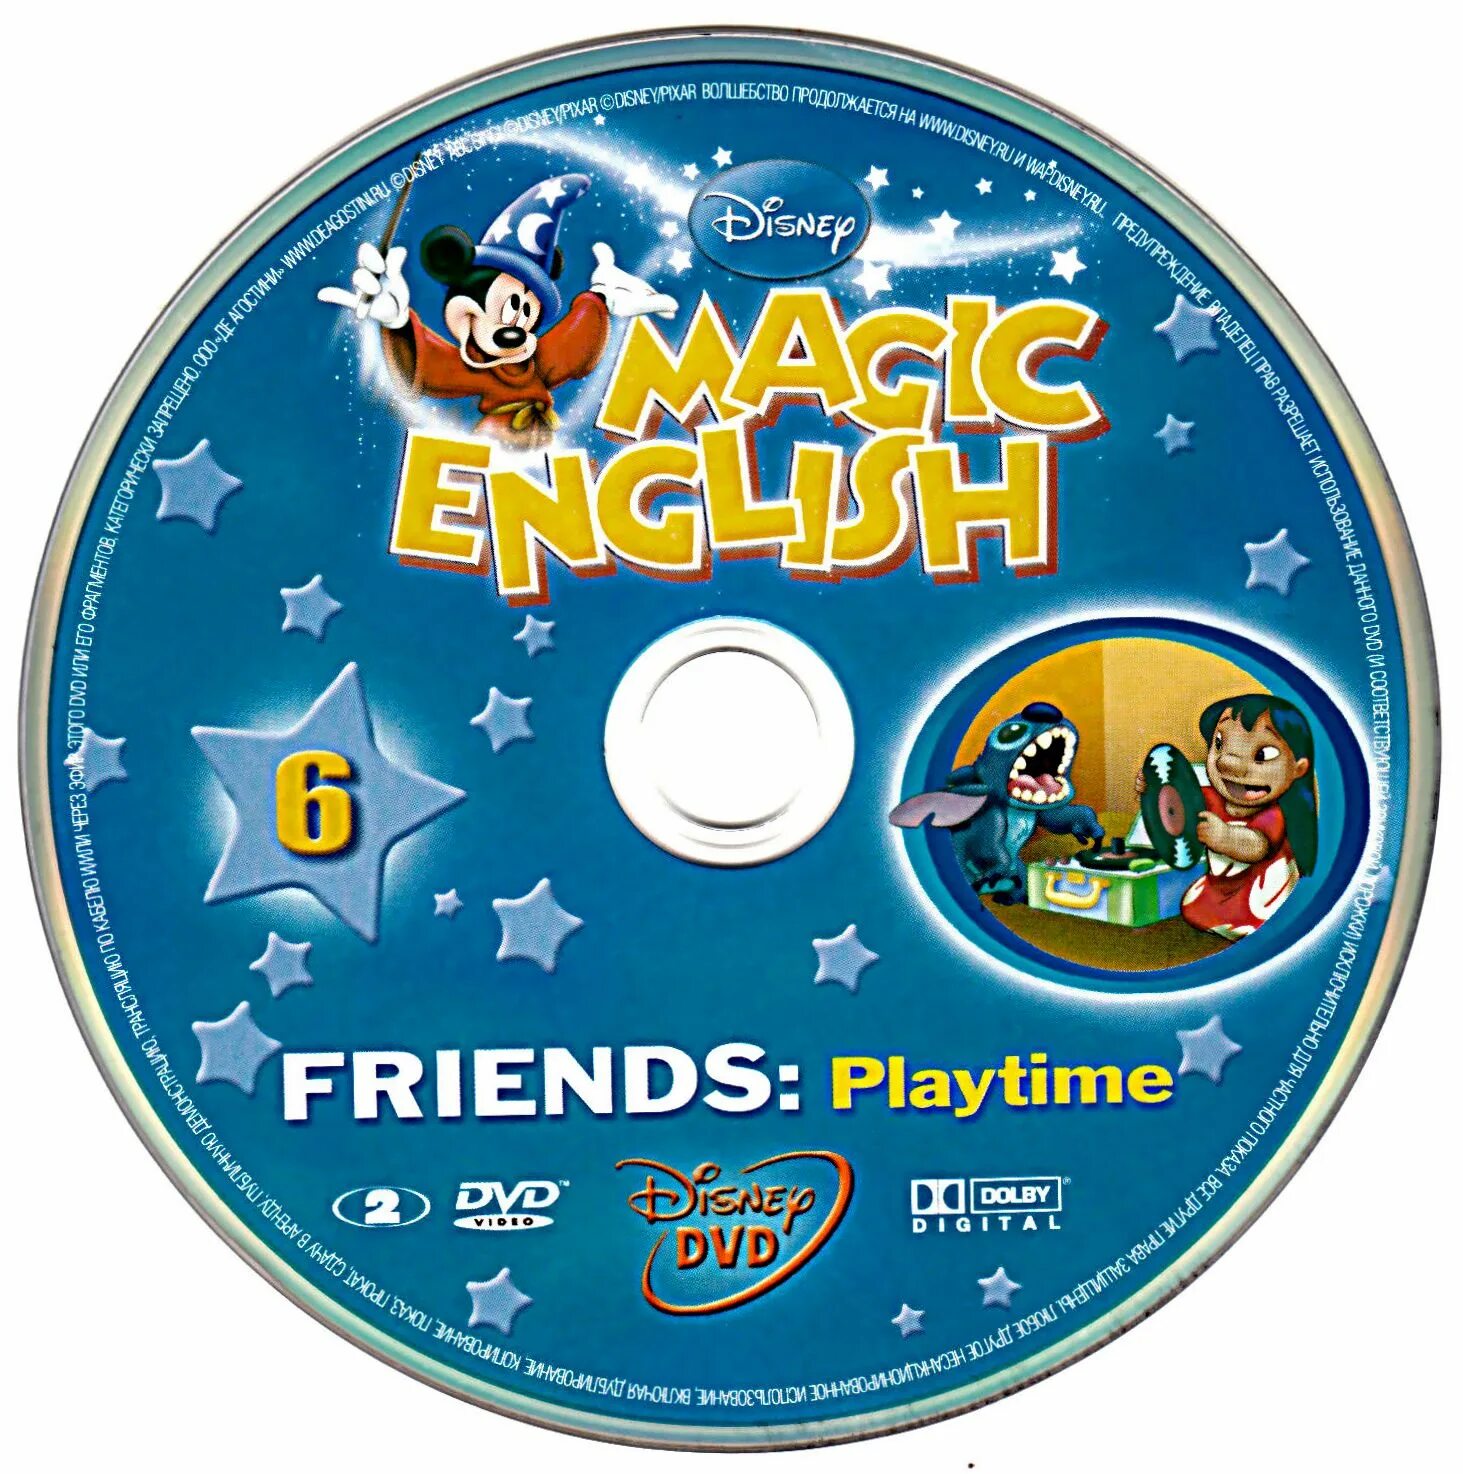 Диски magic. Magic English Disney. Disney's Magic English журнал. Magic English диск. Disney Magic English DVD.